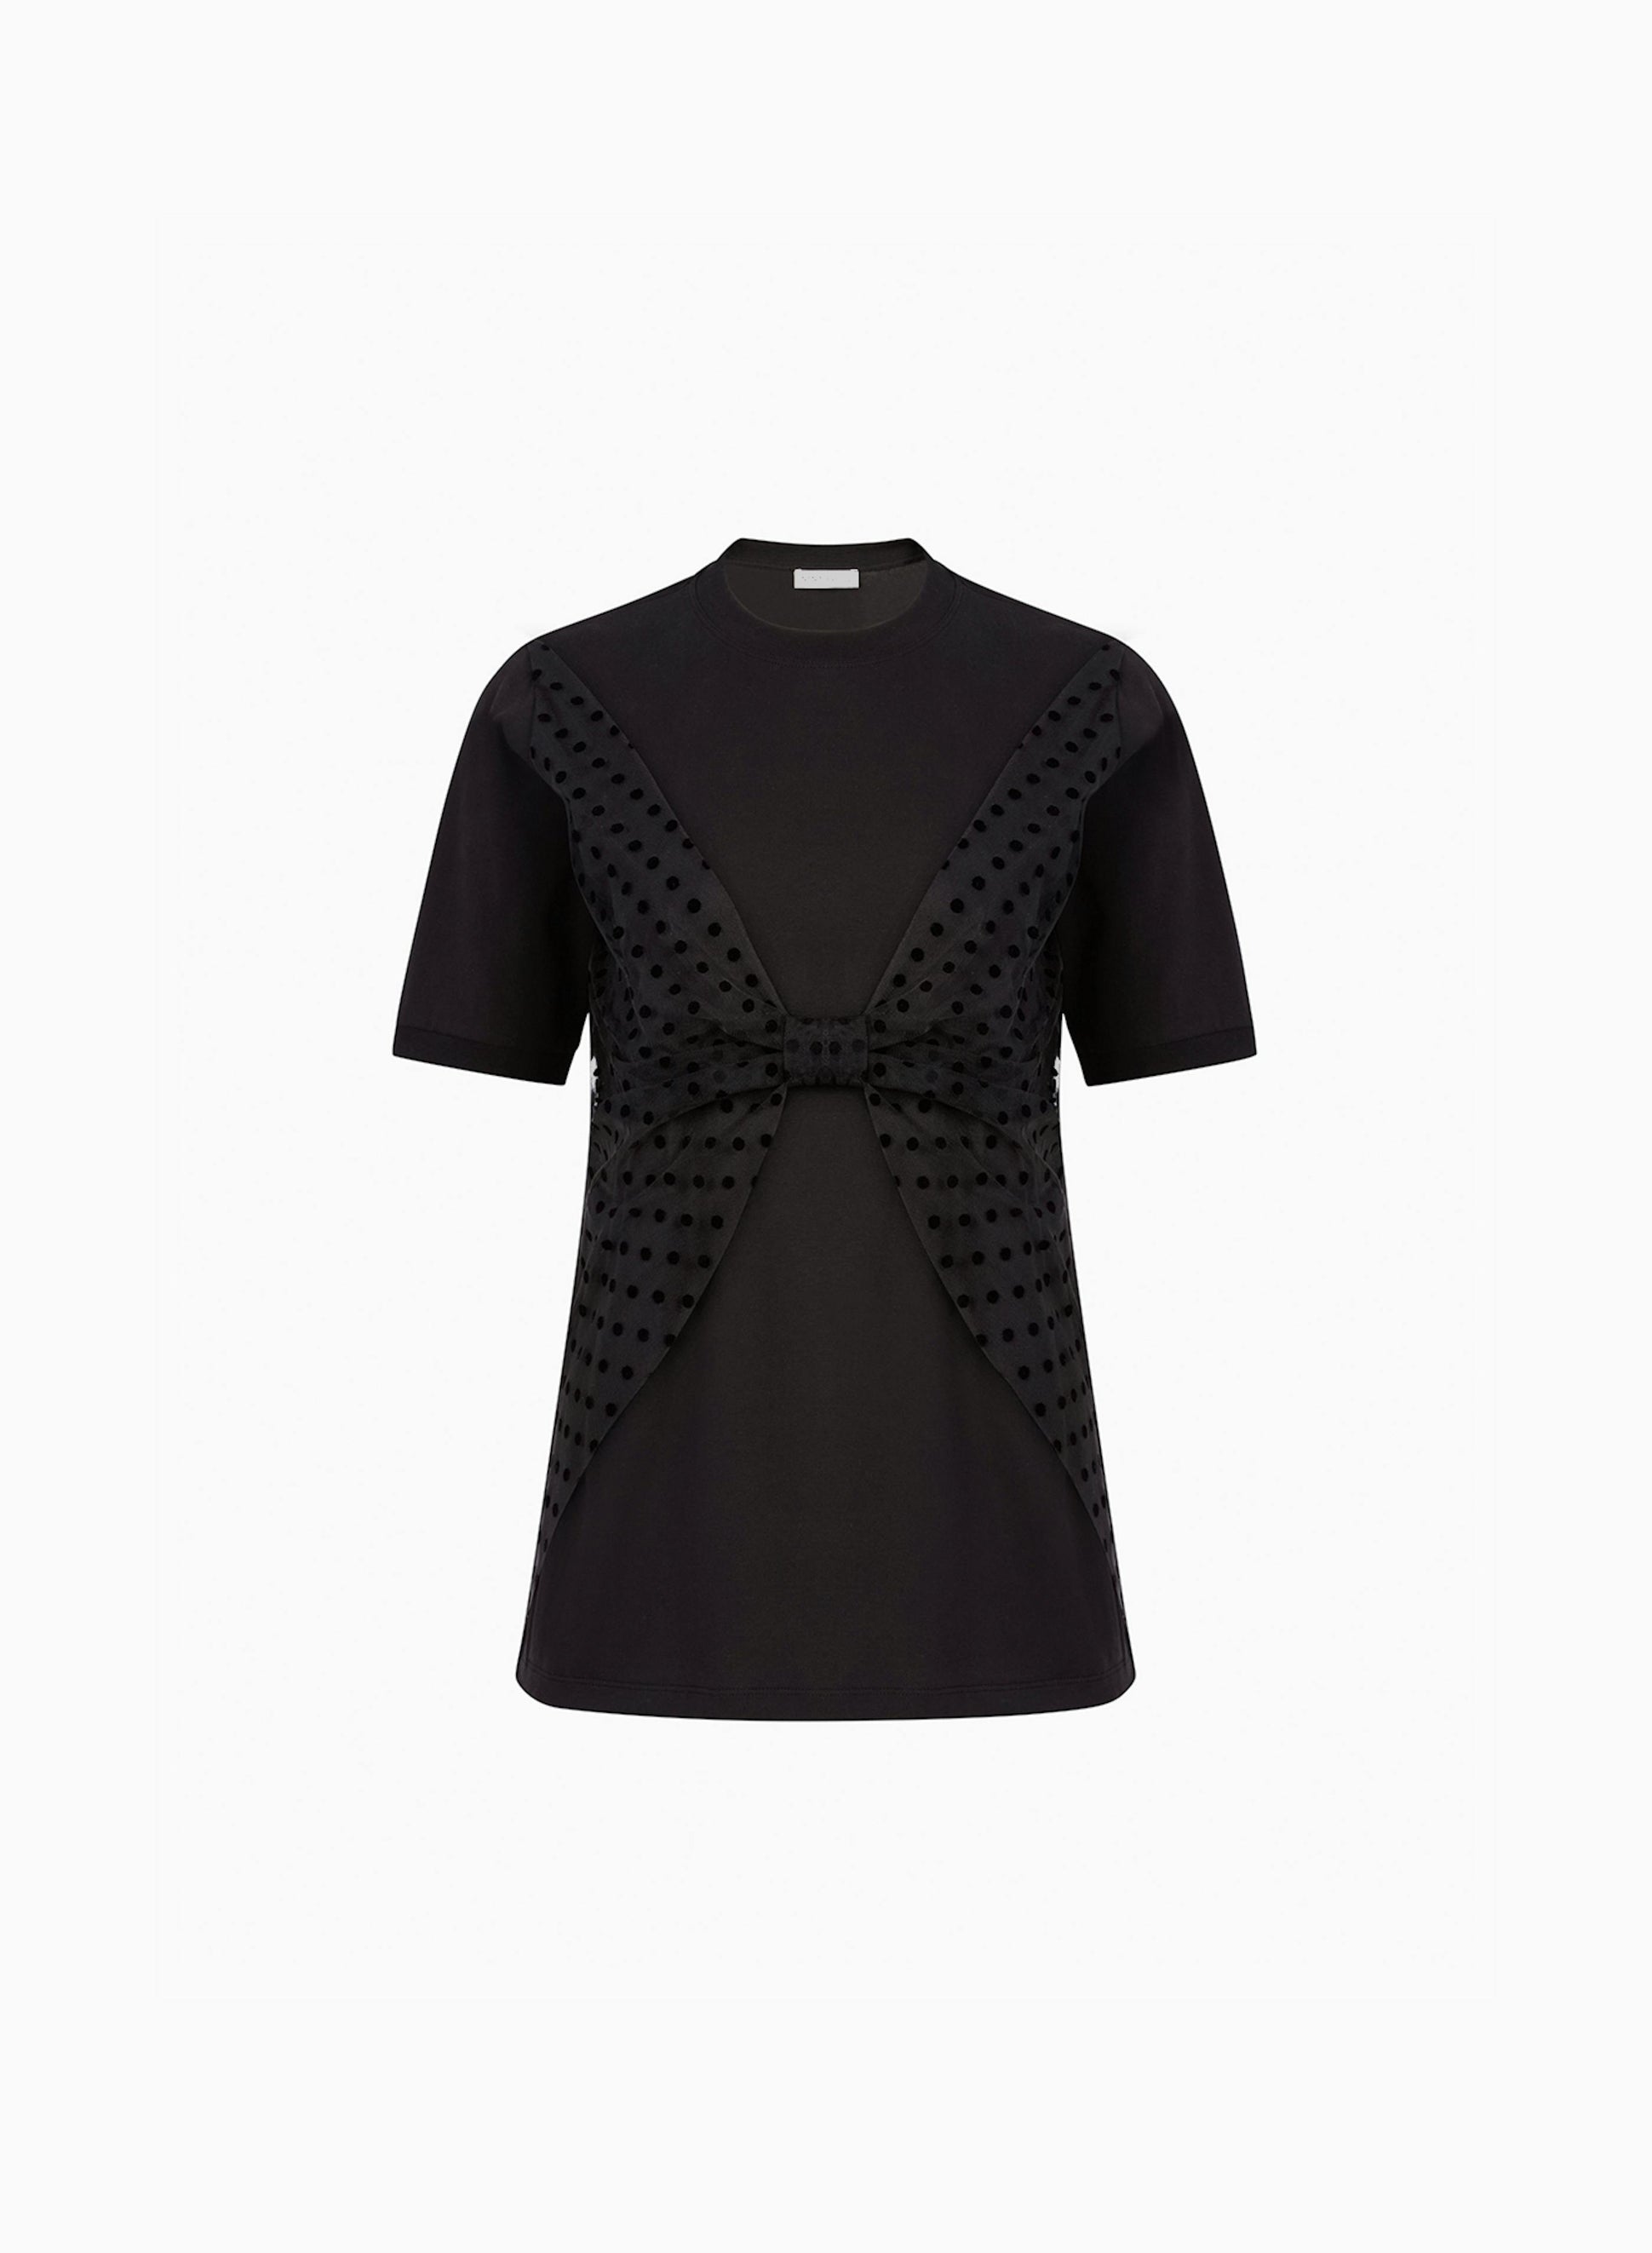 T-shirt with polka dot bow in black - Nina Ricci